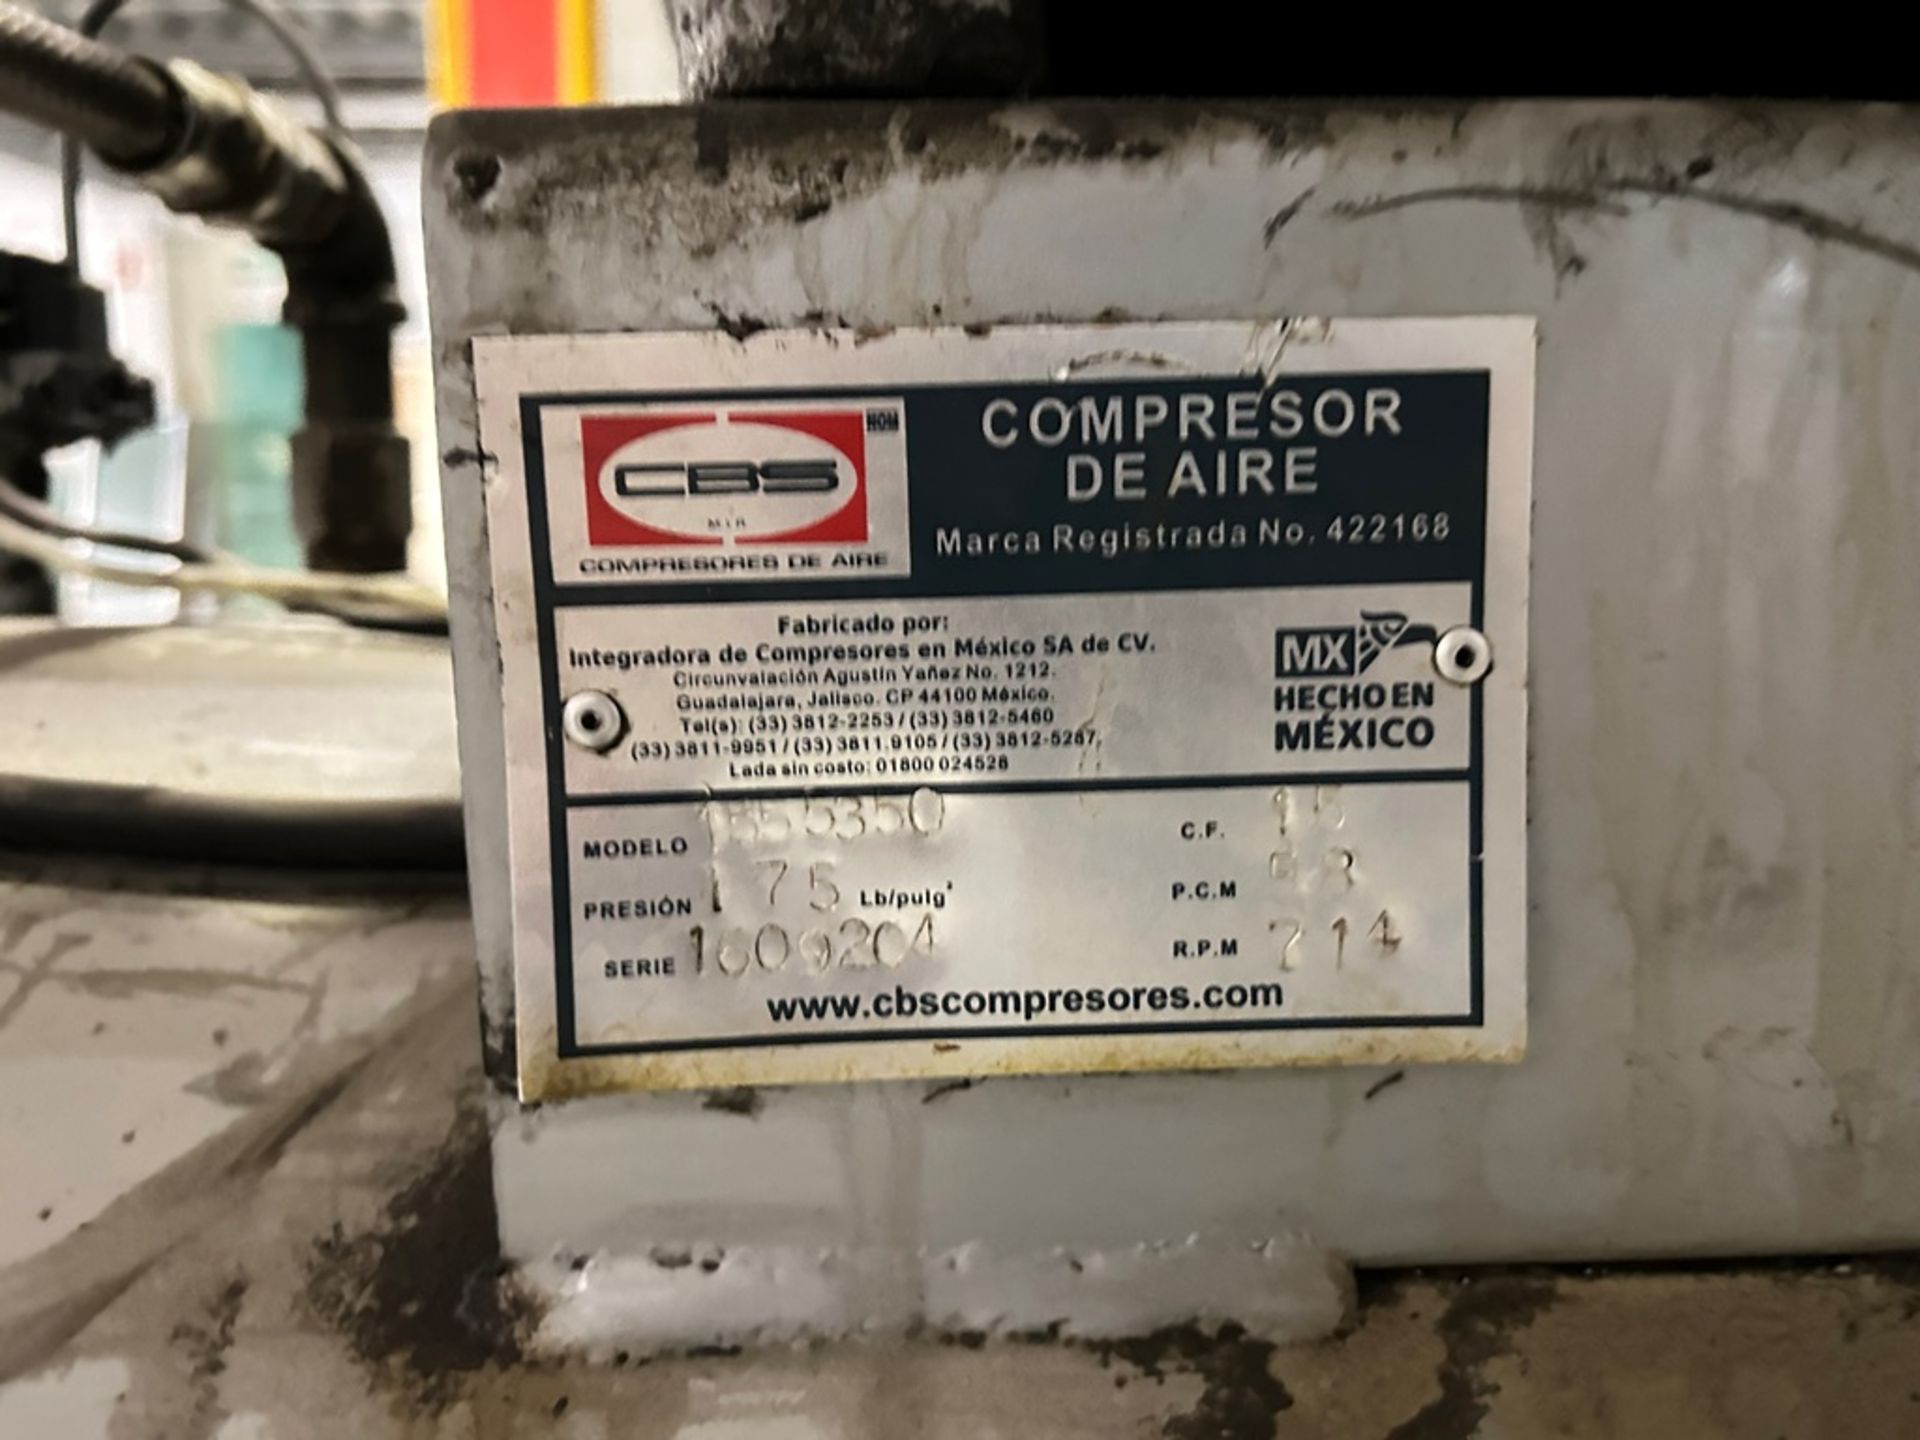 CBS air compressor, Model 1555350, Serial No 1609204, Year 2016, 208-230/460V, Features 15 hp Weg m - Image 10 of 12